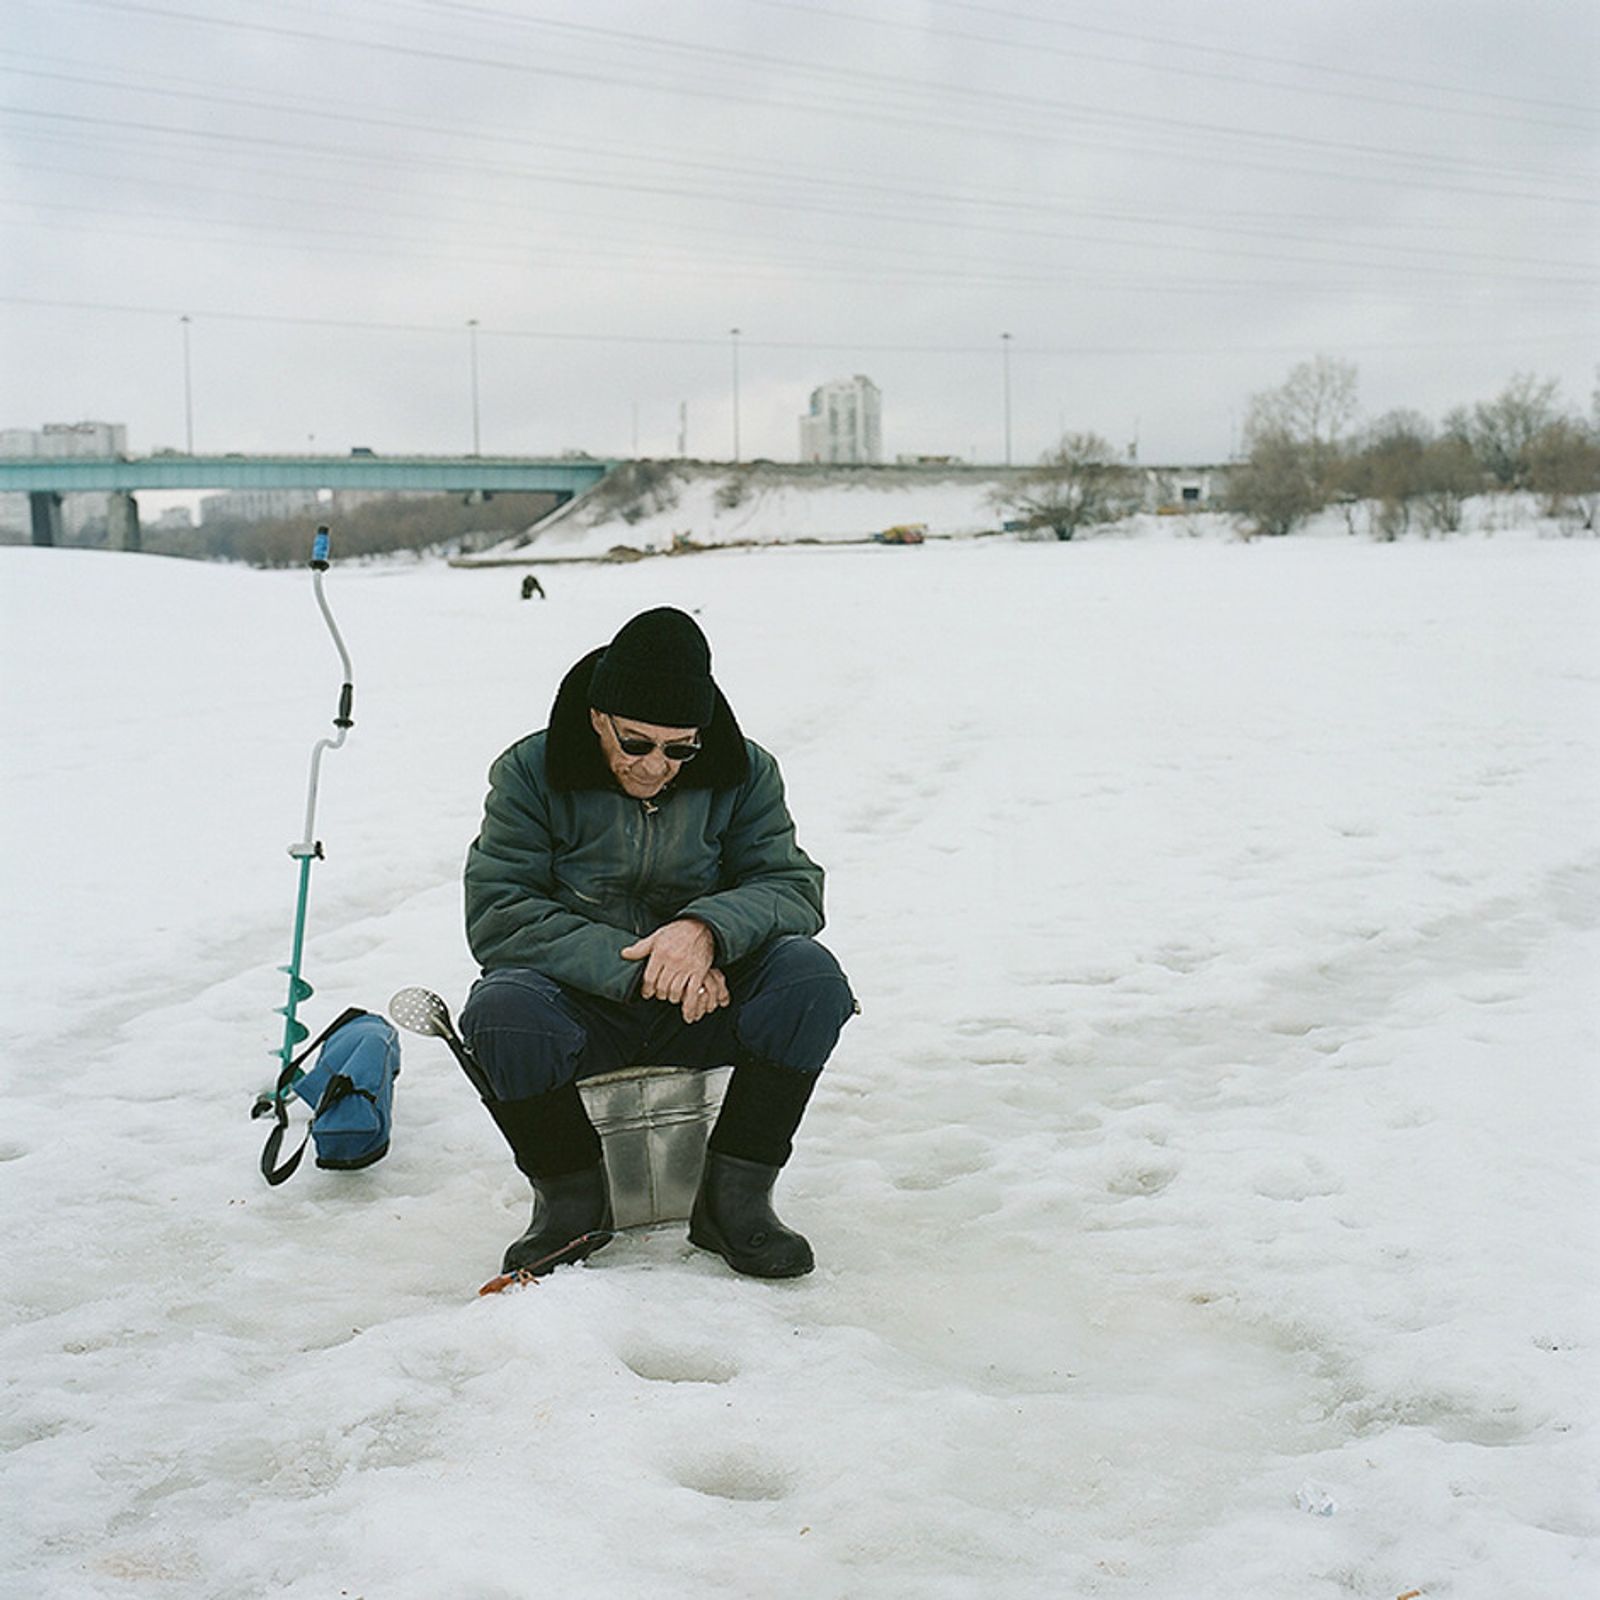 © Sofya Tatarinova - Image from the Fishing in Russia photography project